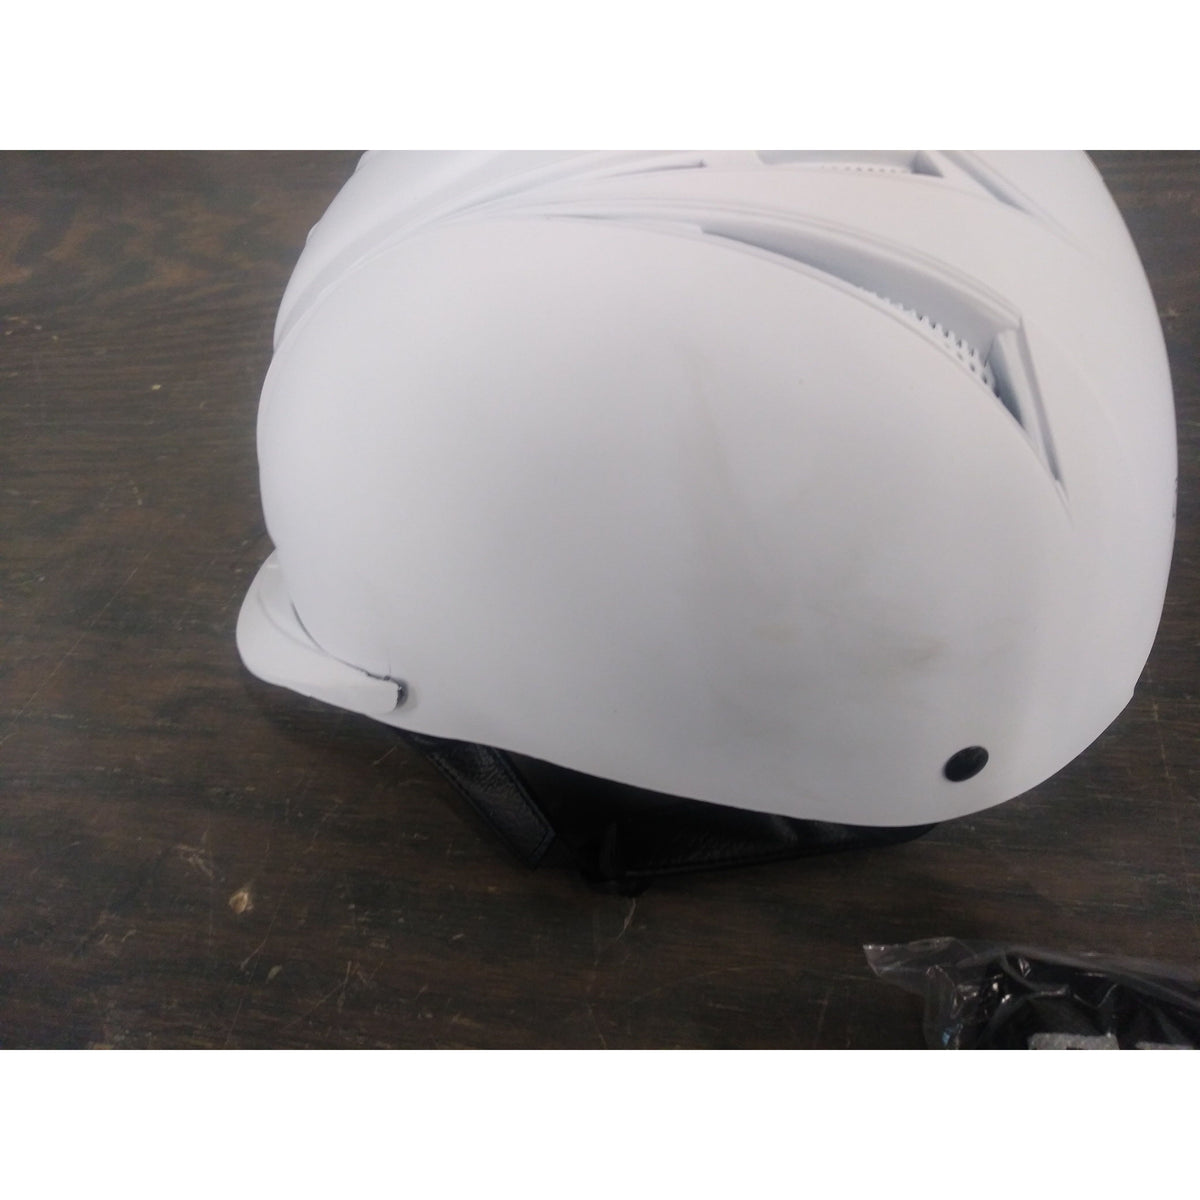 Ovation Deluxe Schooler Helmet - White - Medium/Large - Used - Acceptable